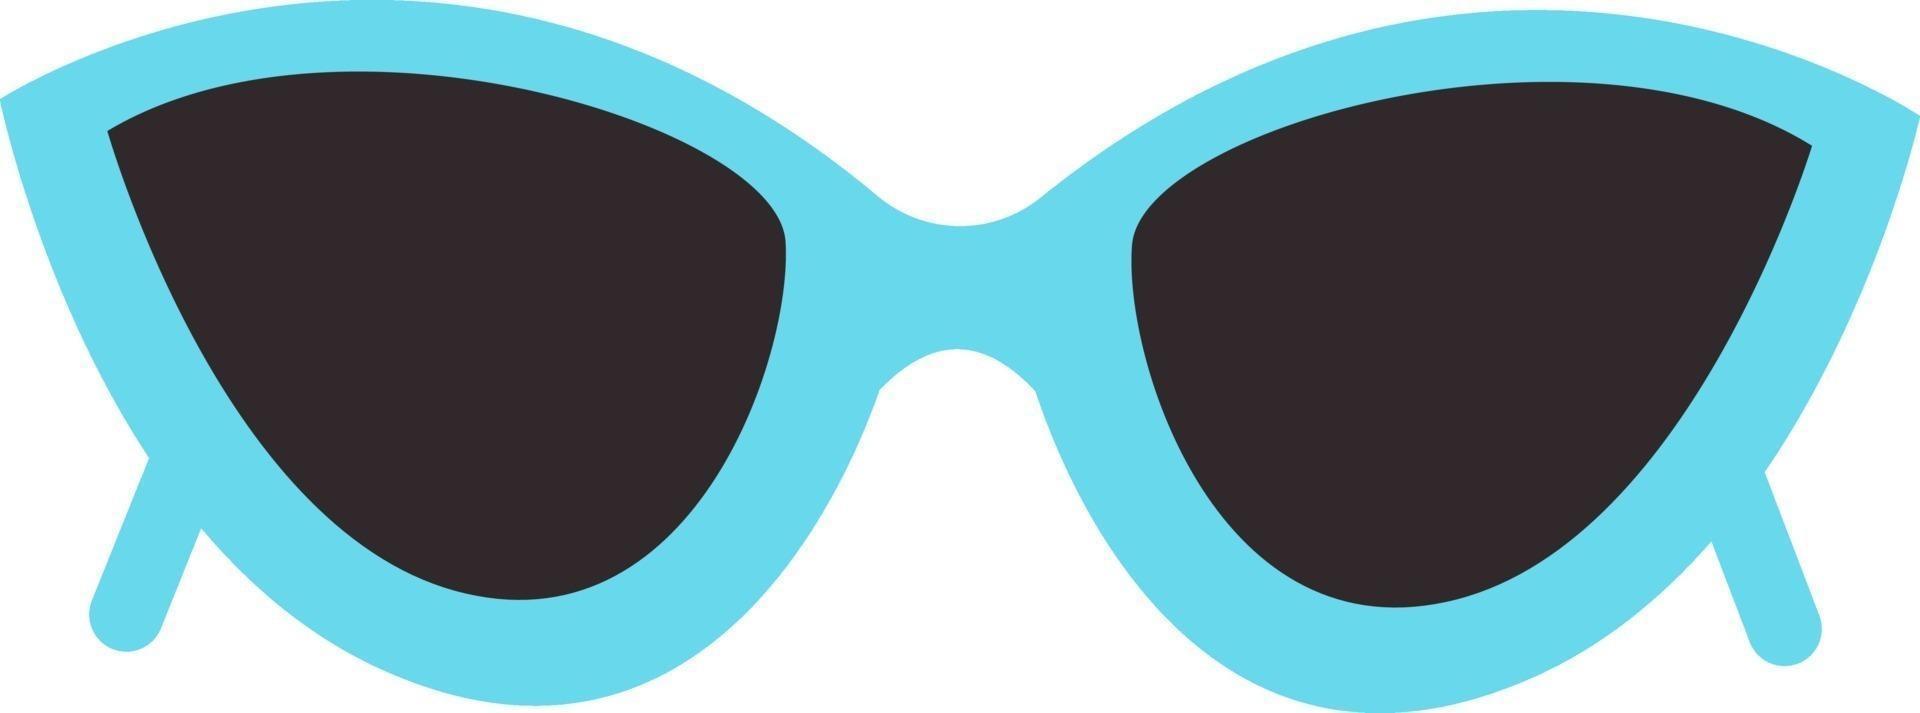 Sunglasses, illustration, vector on white background